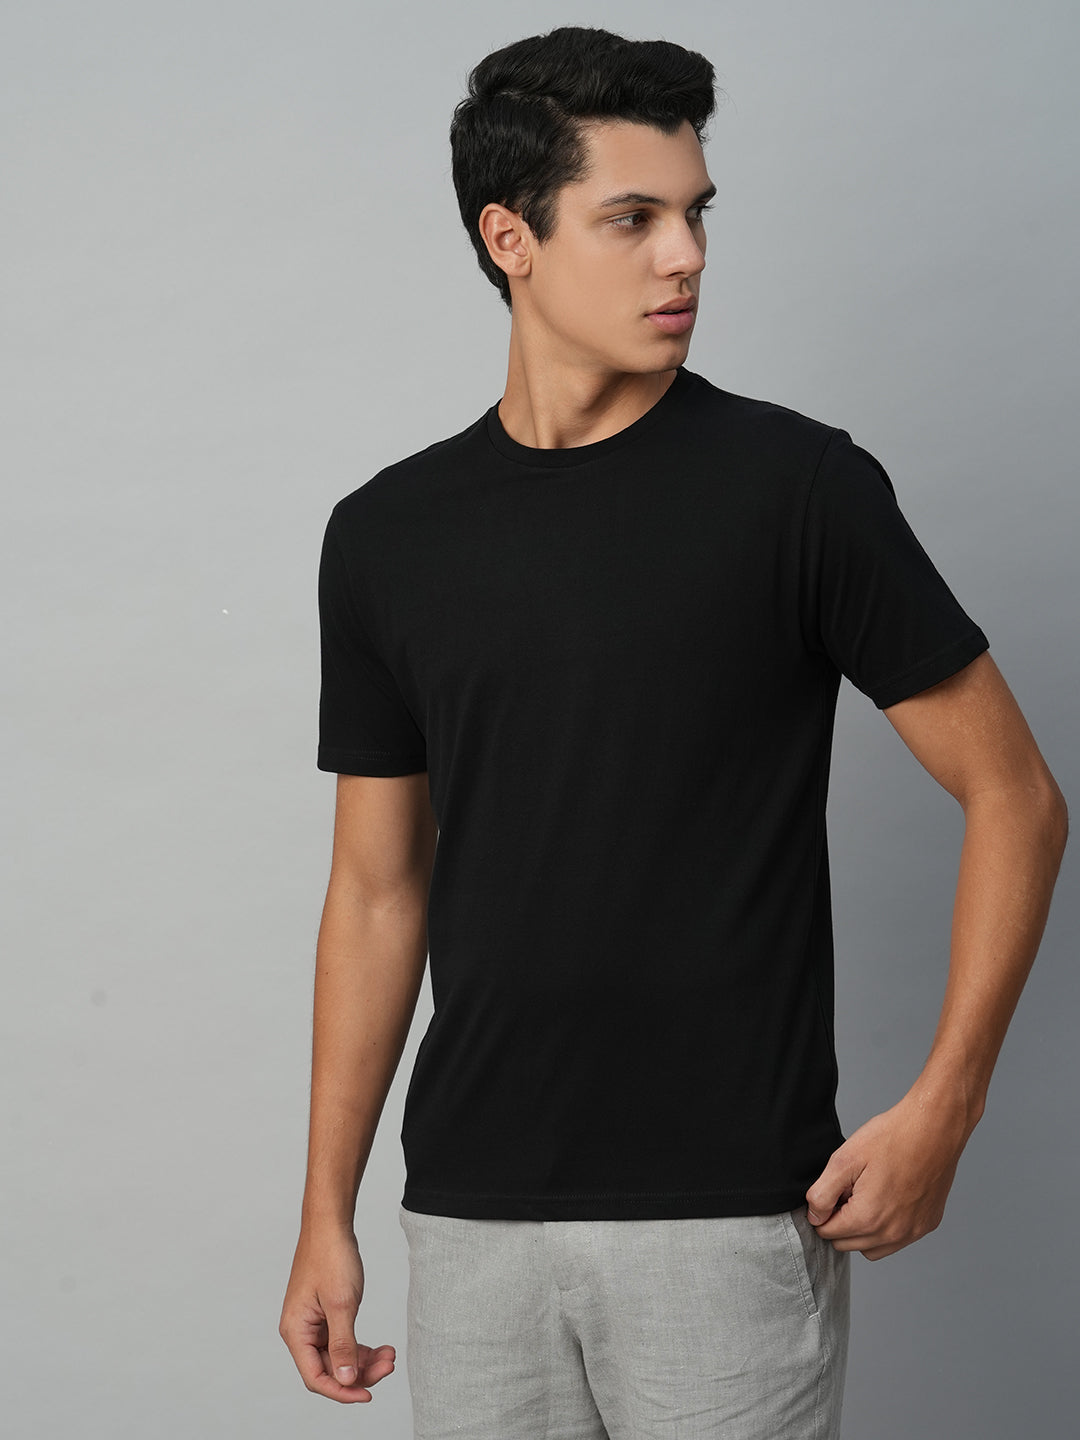 Men's Cotton Black Regular Fit Tshirt